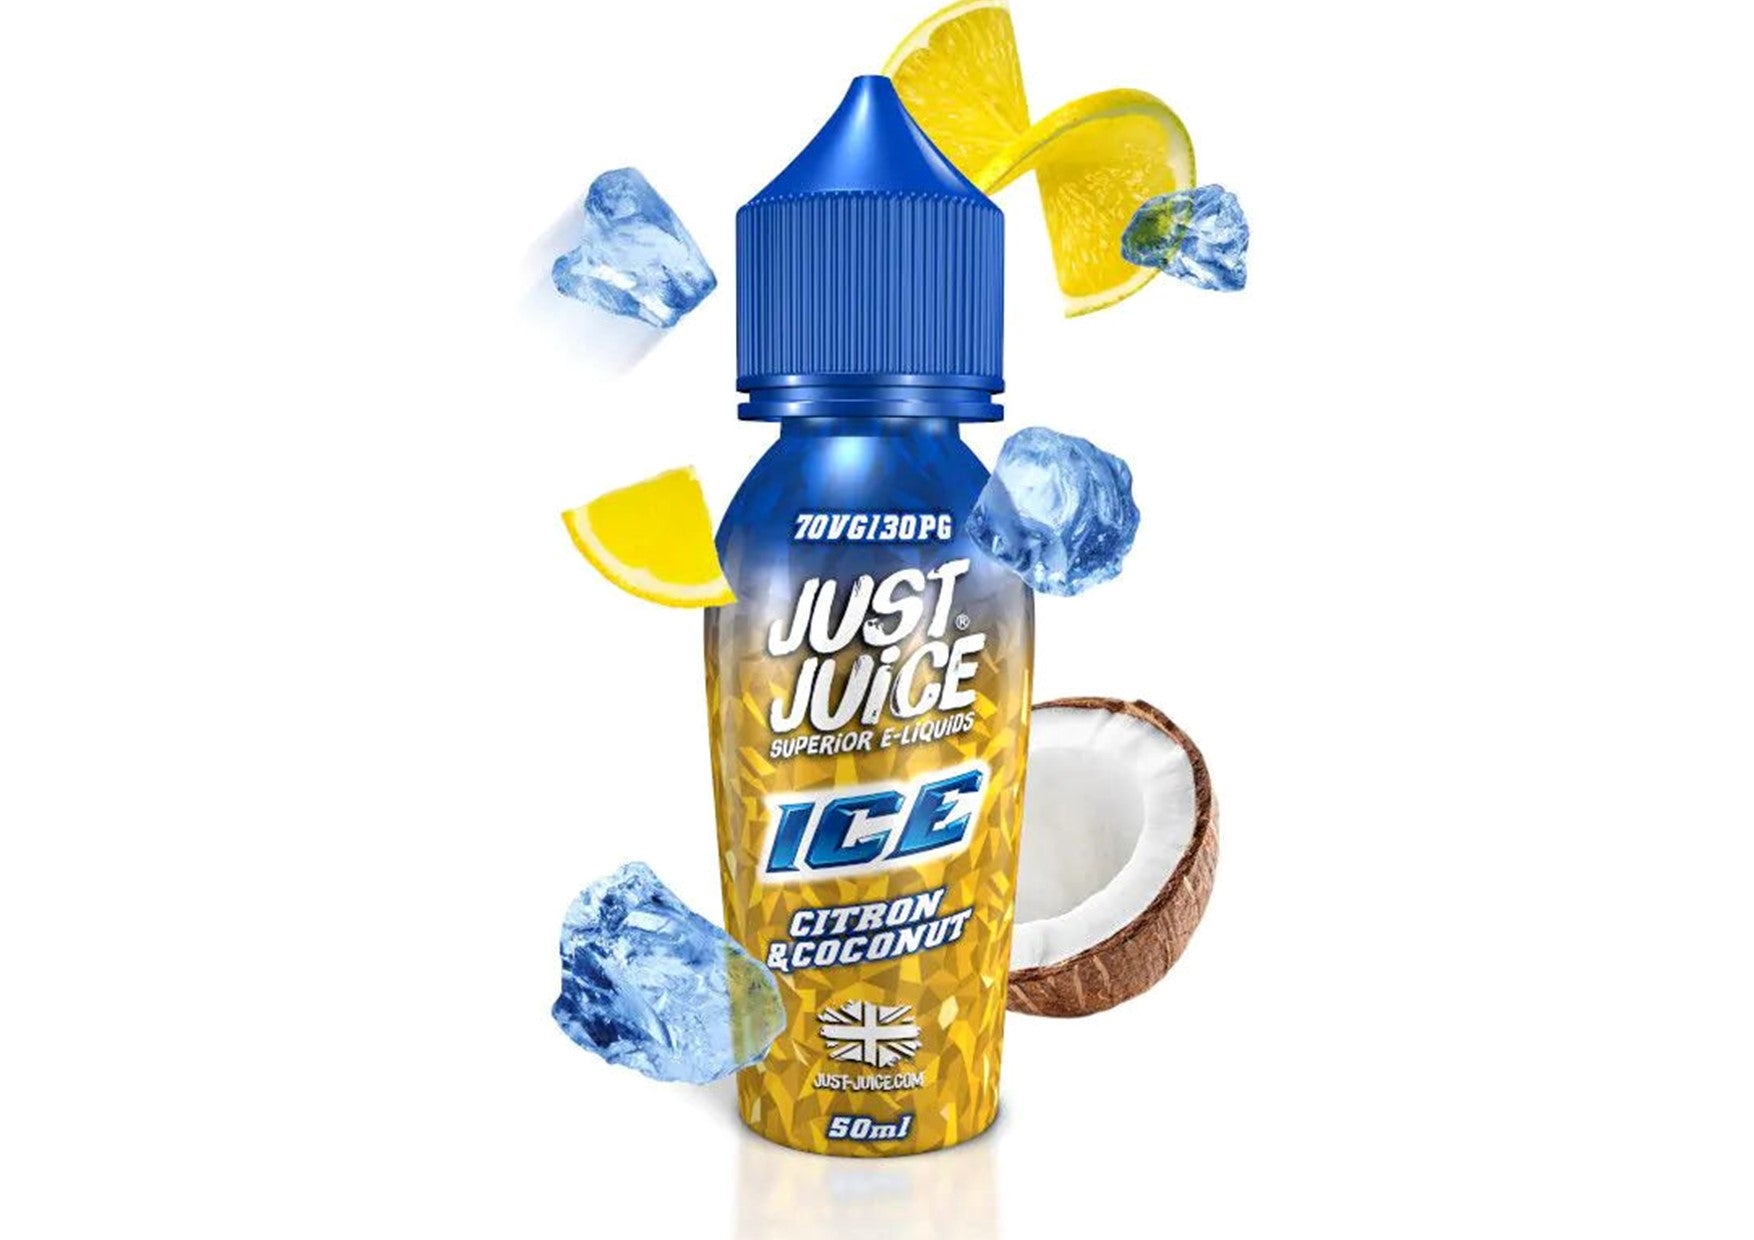 Just Juice | Citron & Coconut ICE